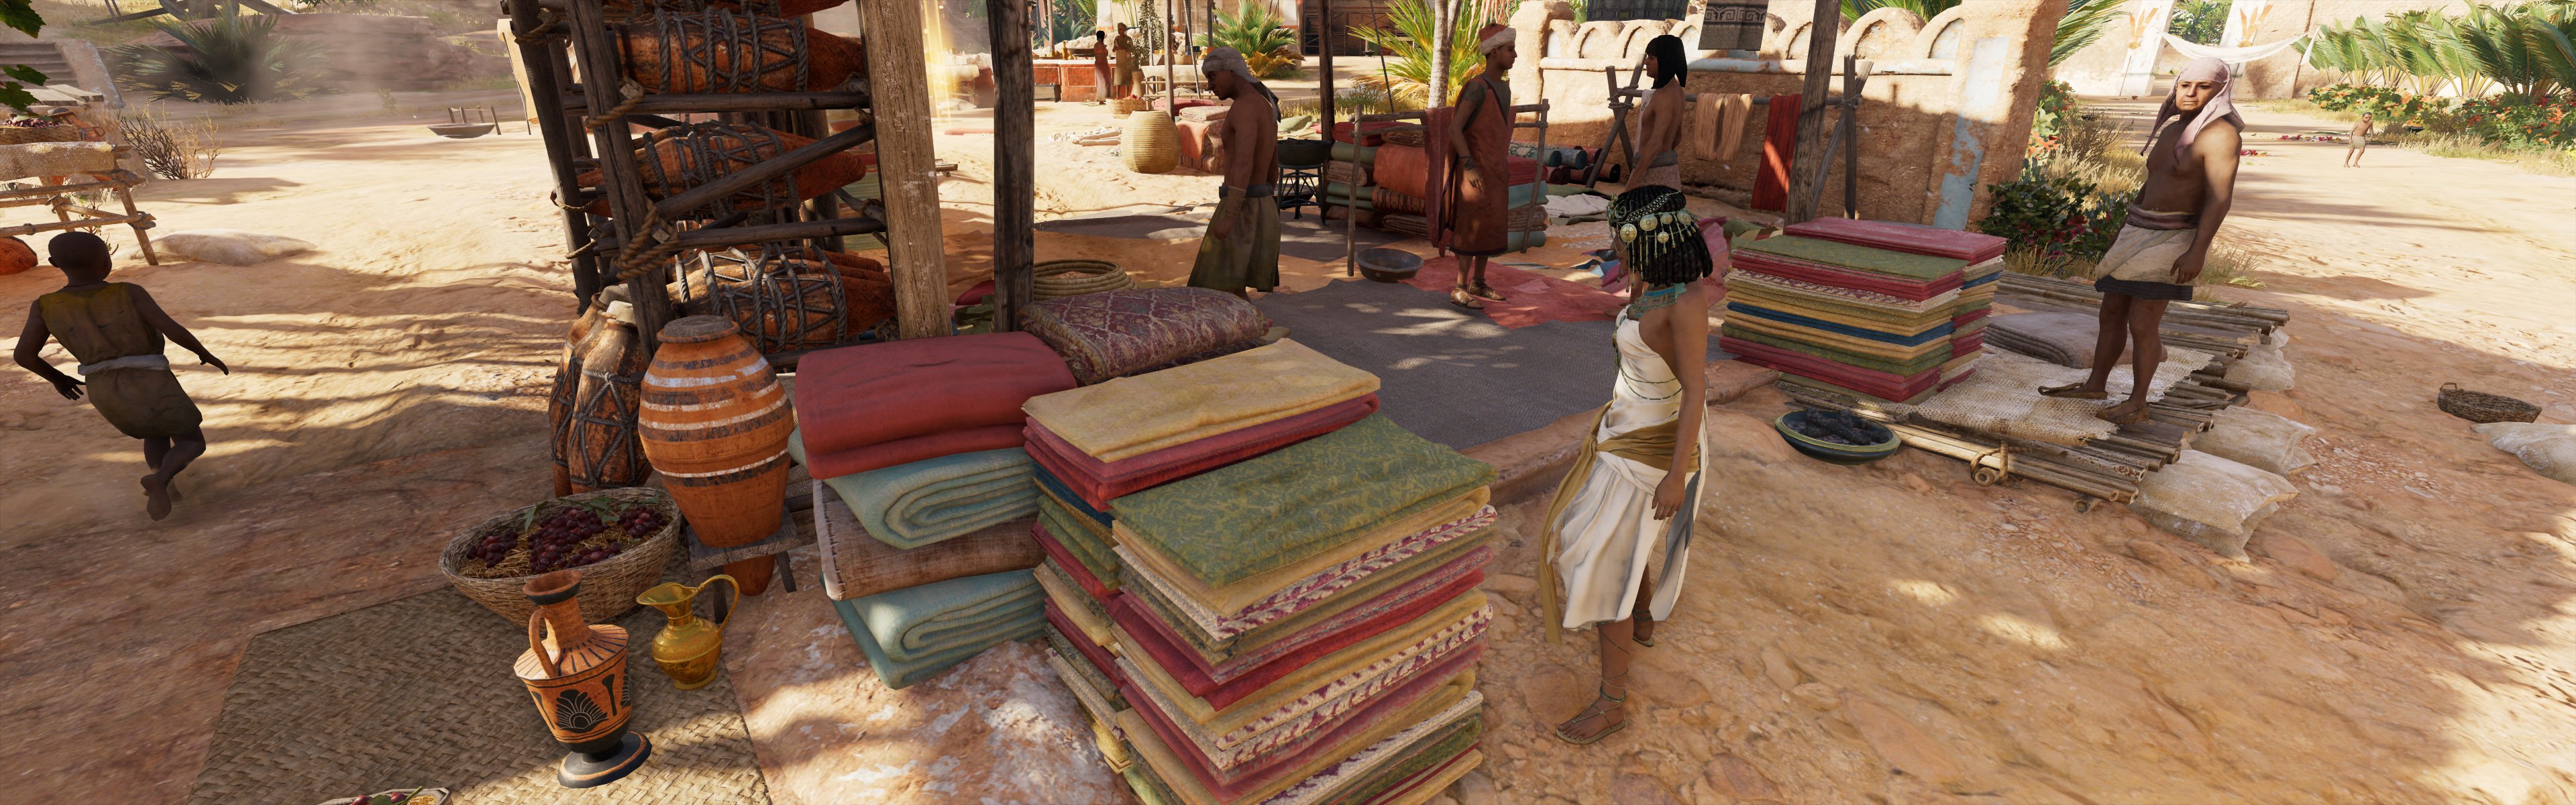 General 3840x1200 Egypt video game art Assassin's Creed desert video games CGI vases towel sunlight shade